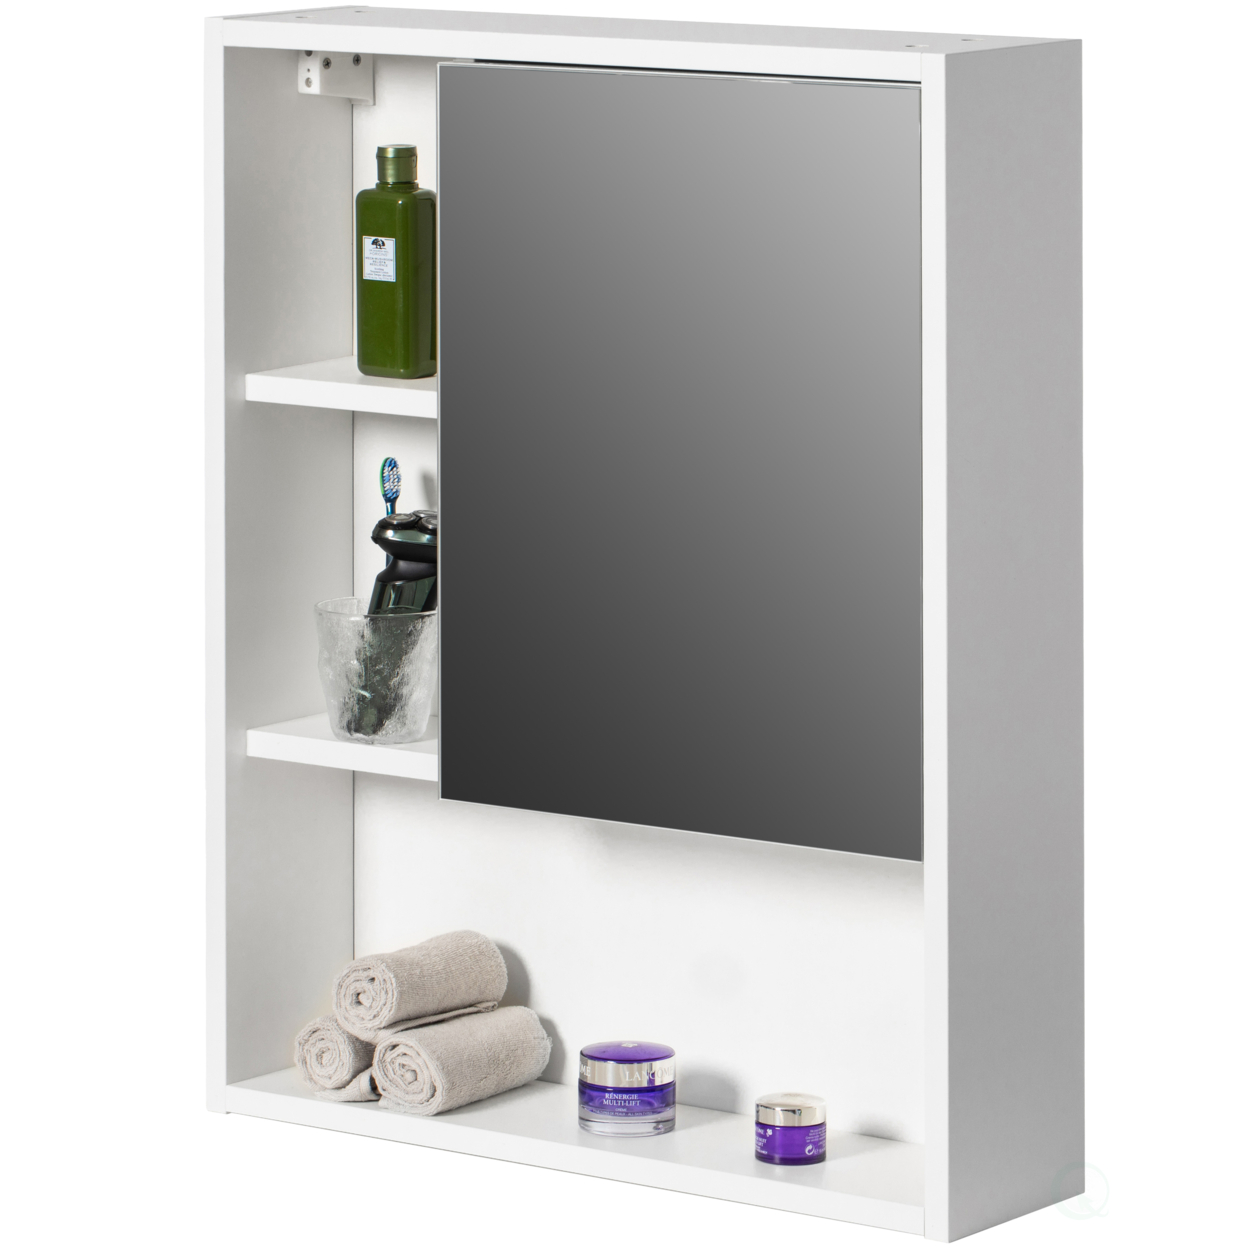 Wall Mount Bathroom Mirrored Storage Cabinet With Open Shelf 2 Adjustable Shelves Medicine Organizer Storage Furniture - Black